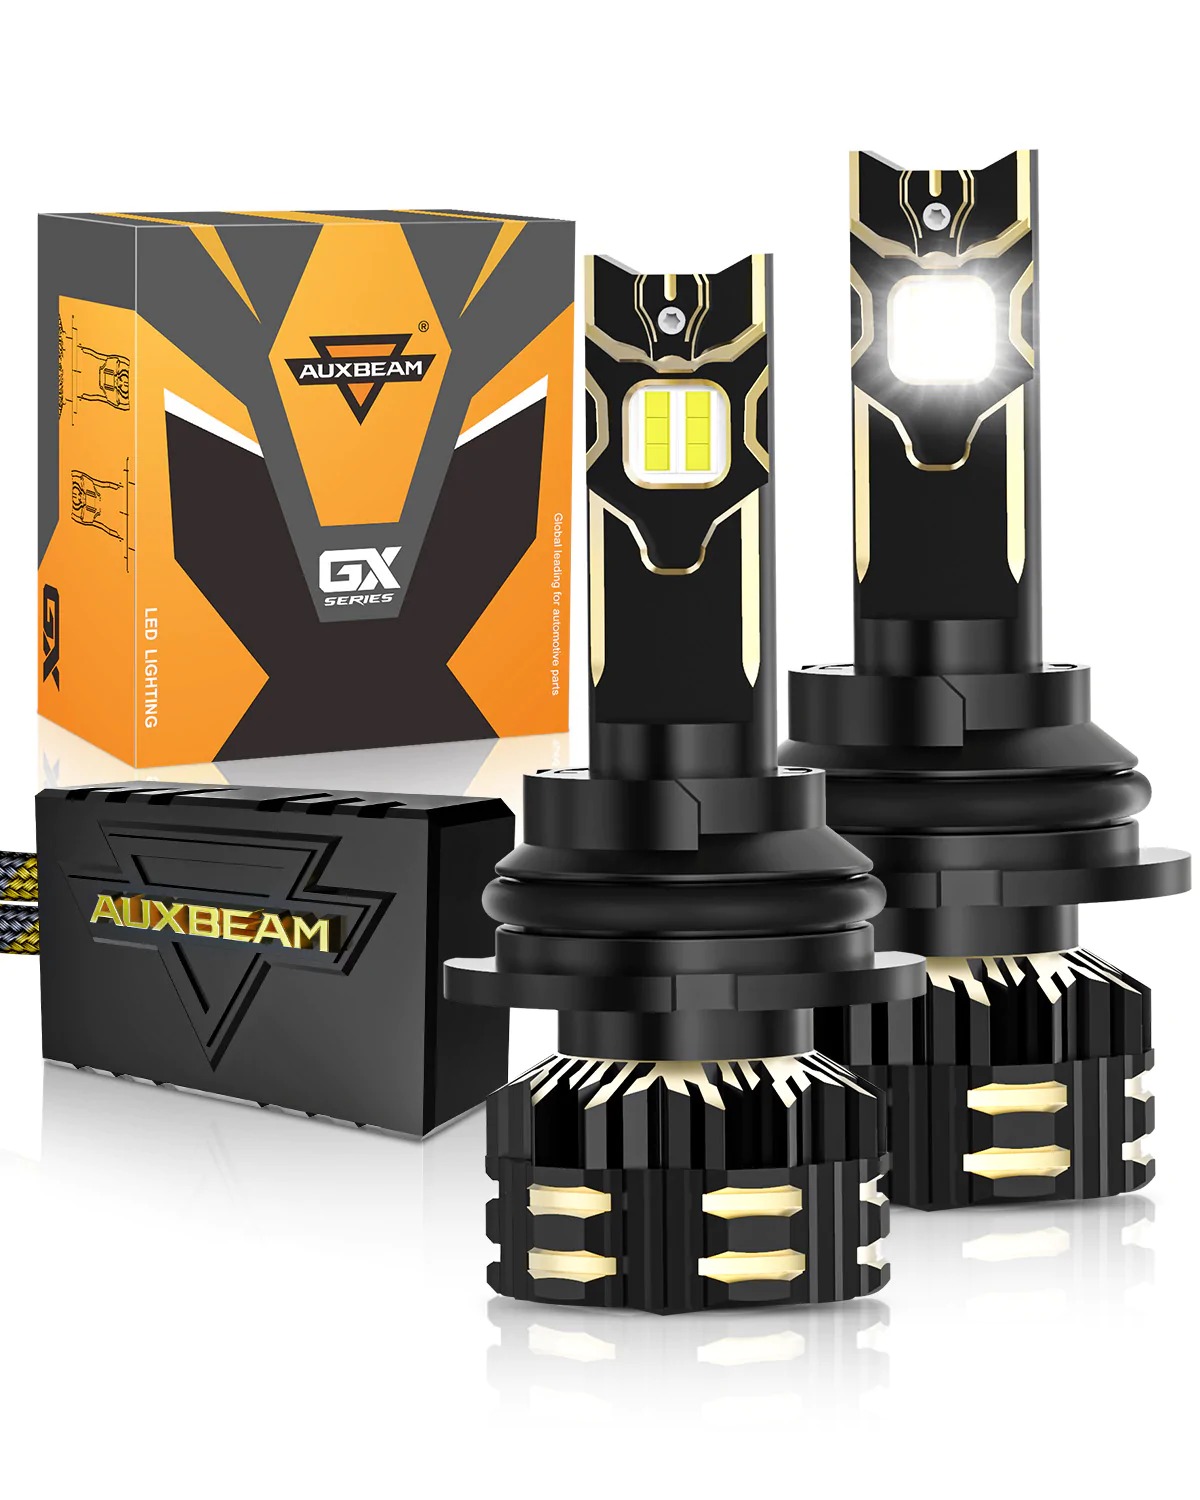 Auxbeam GX Pro Series 160W 30000 Lumens LED Light Bulb